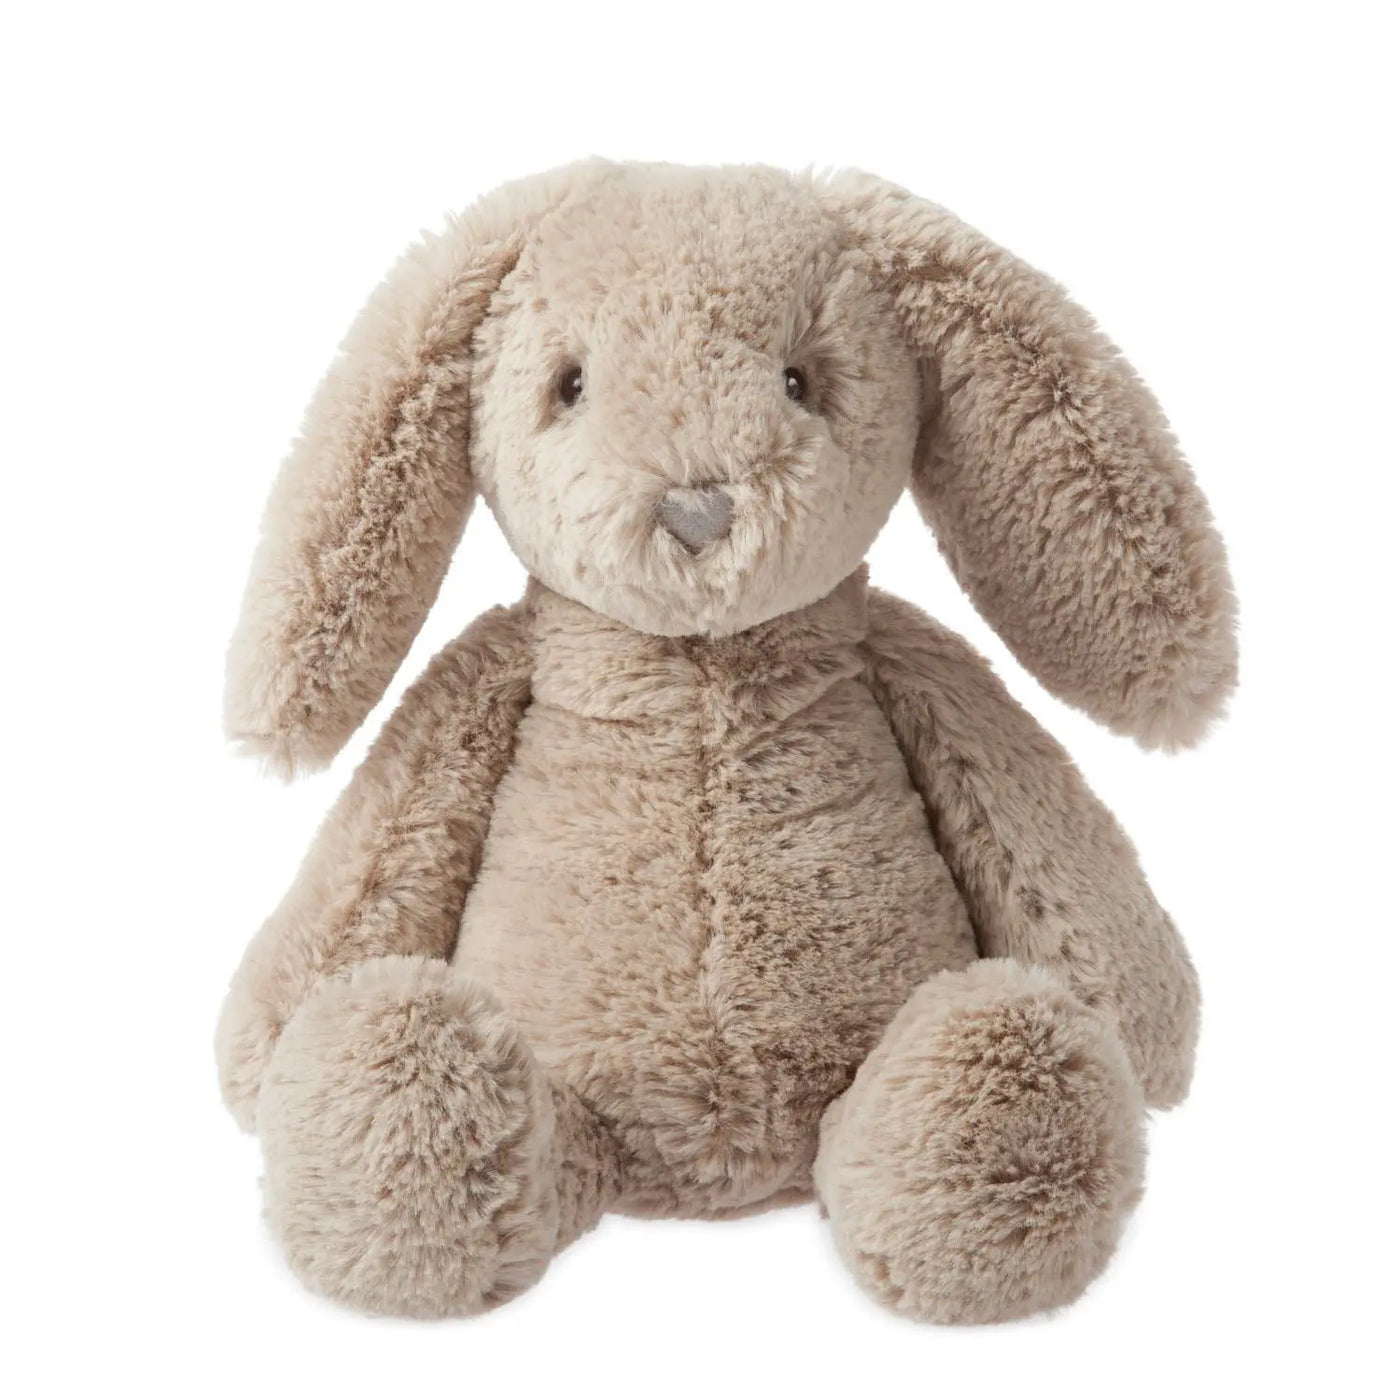 stuffed animals for rabbits